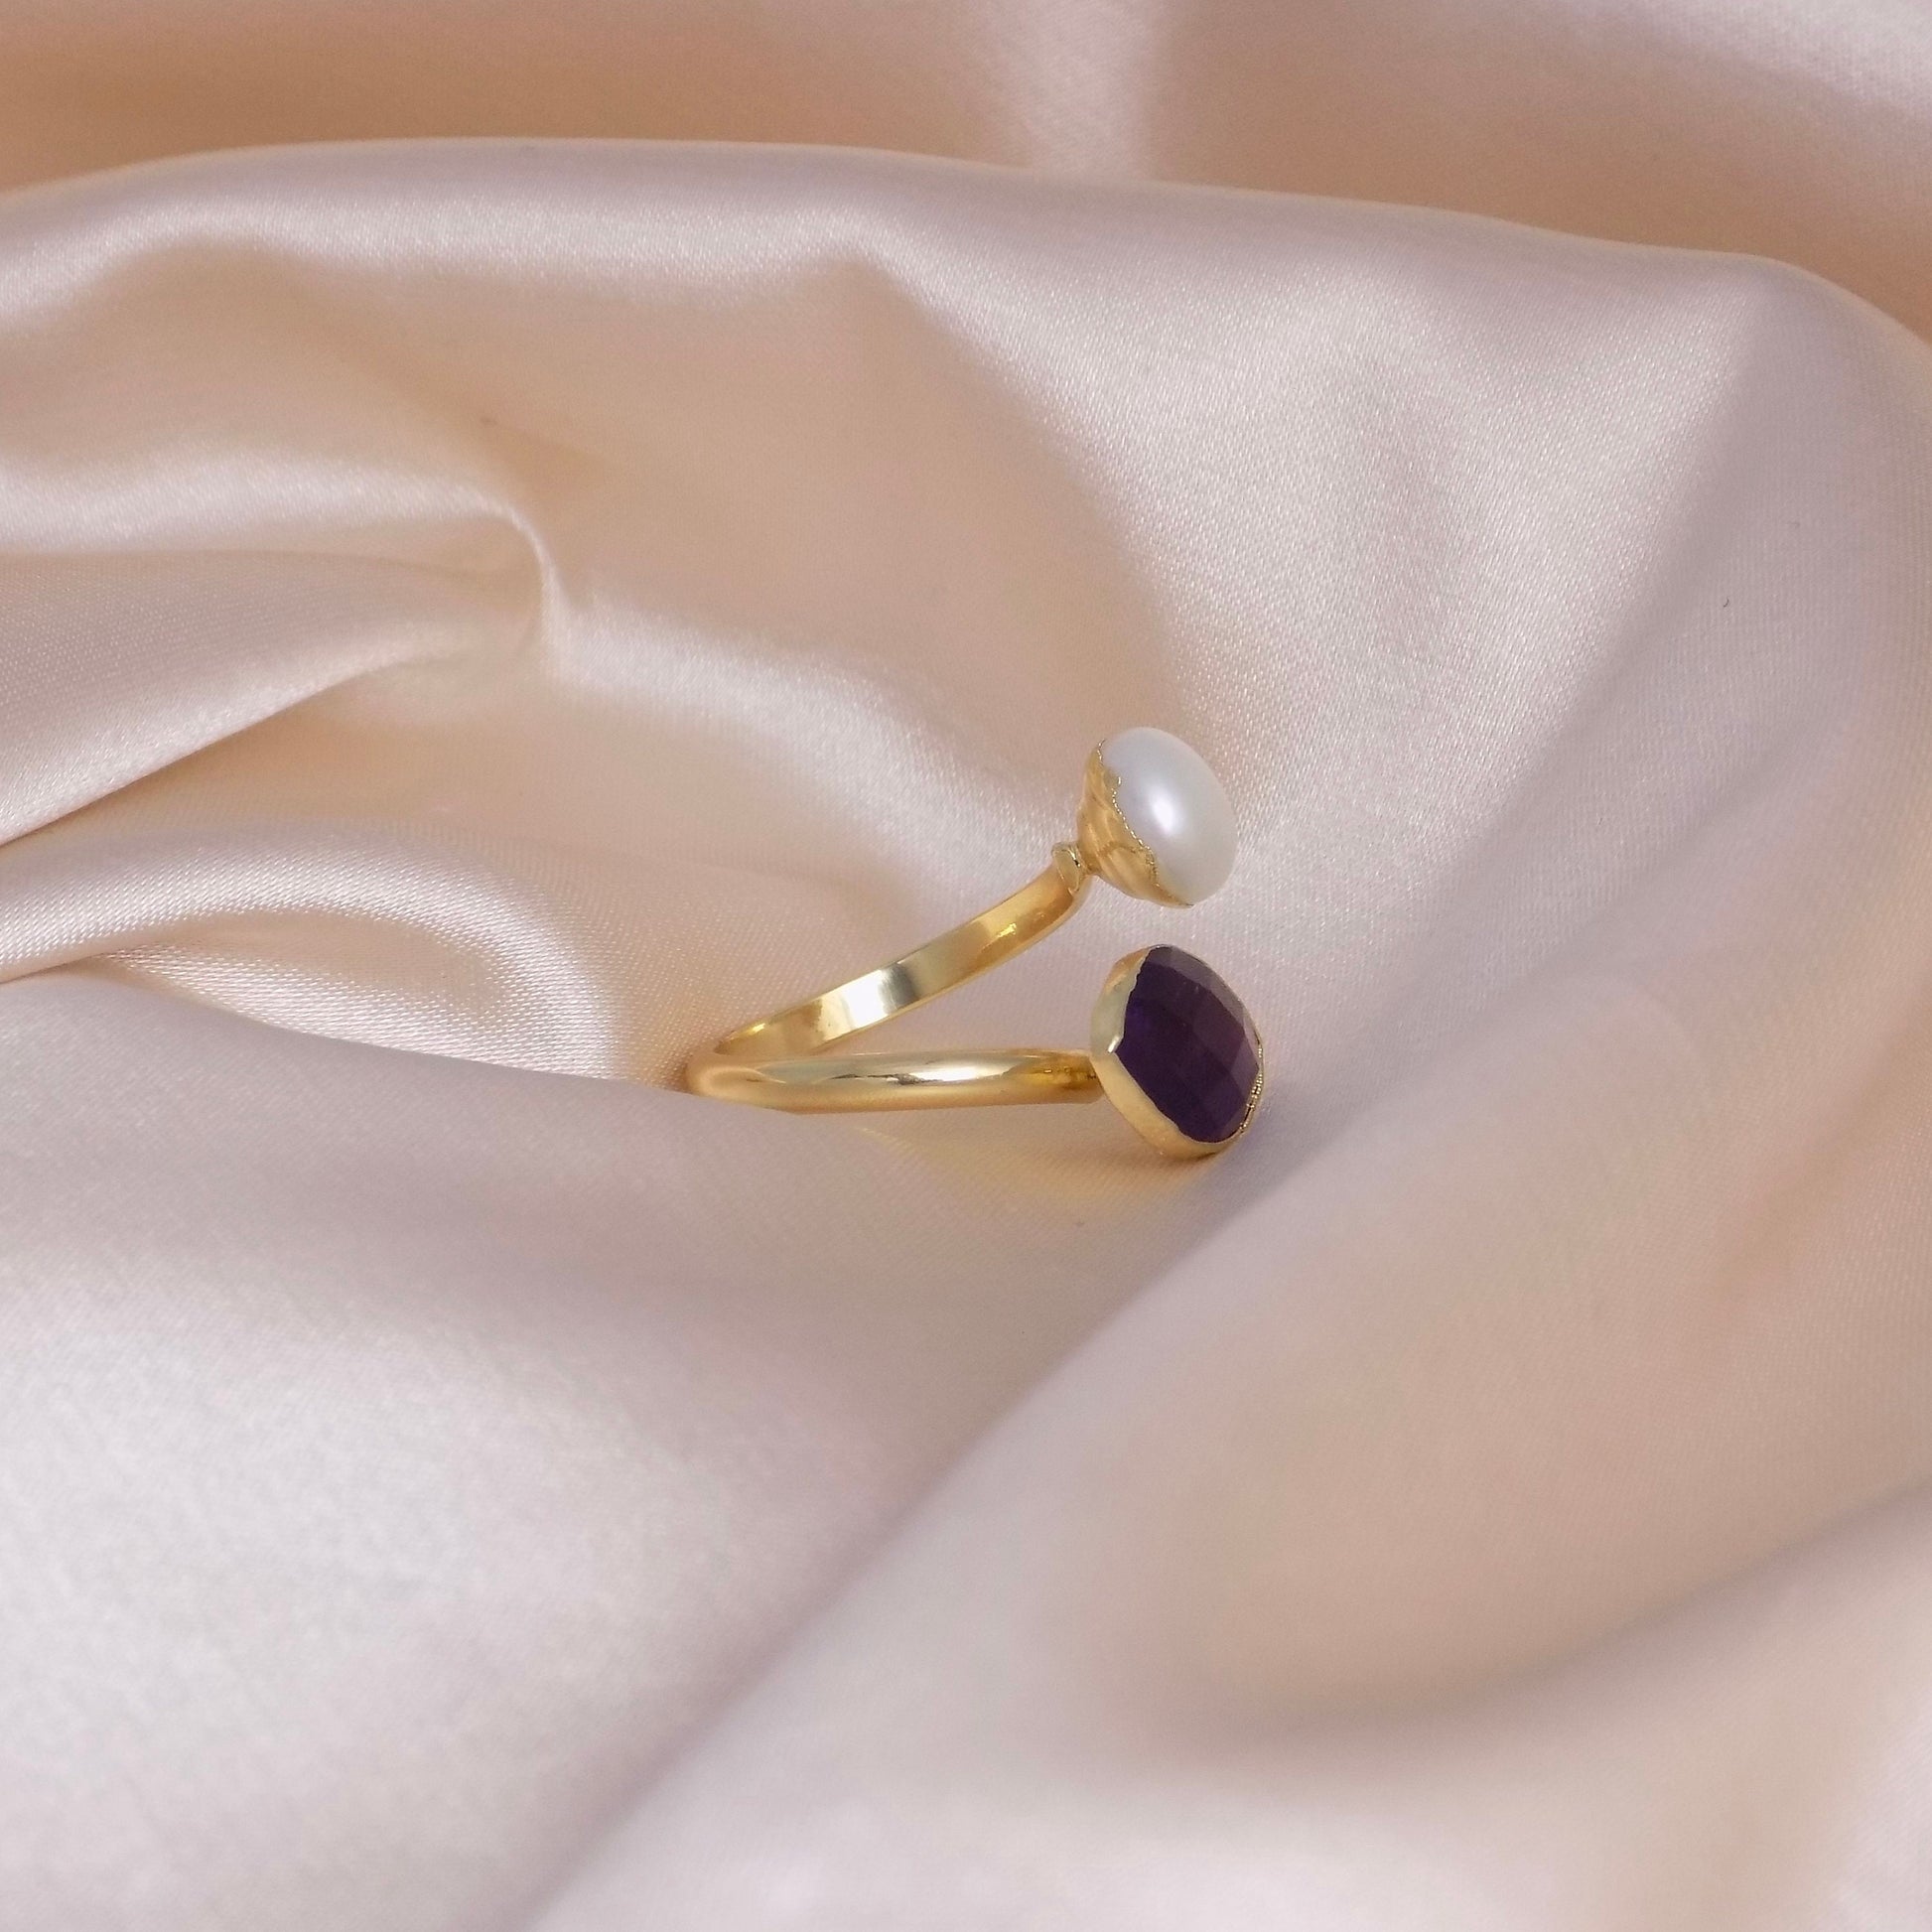 Amethyst Ring, Freshwater Pearl Ring, Dual Crystal Rings Gemstone, Purple Stone, Minimalist Statement, M6-576